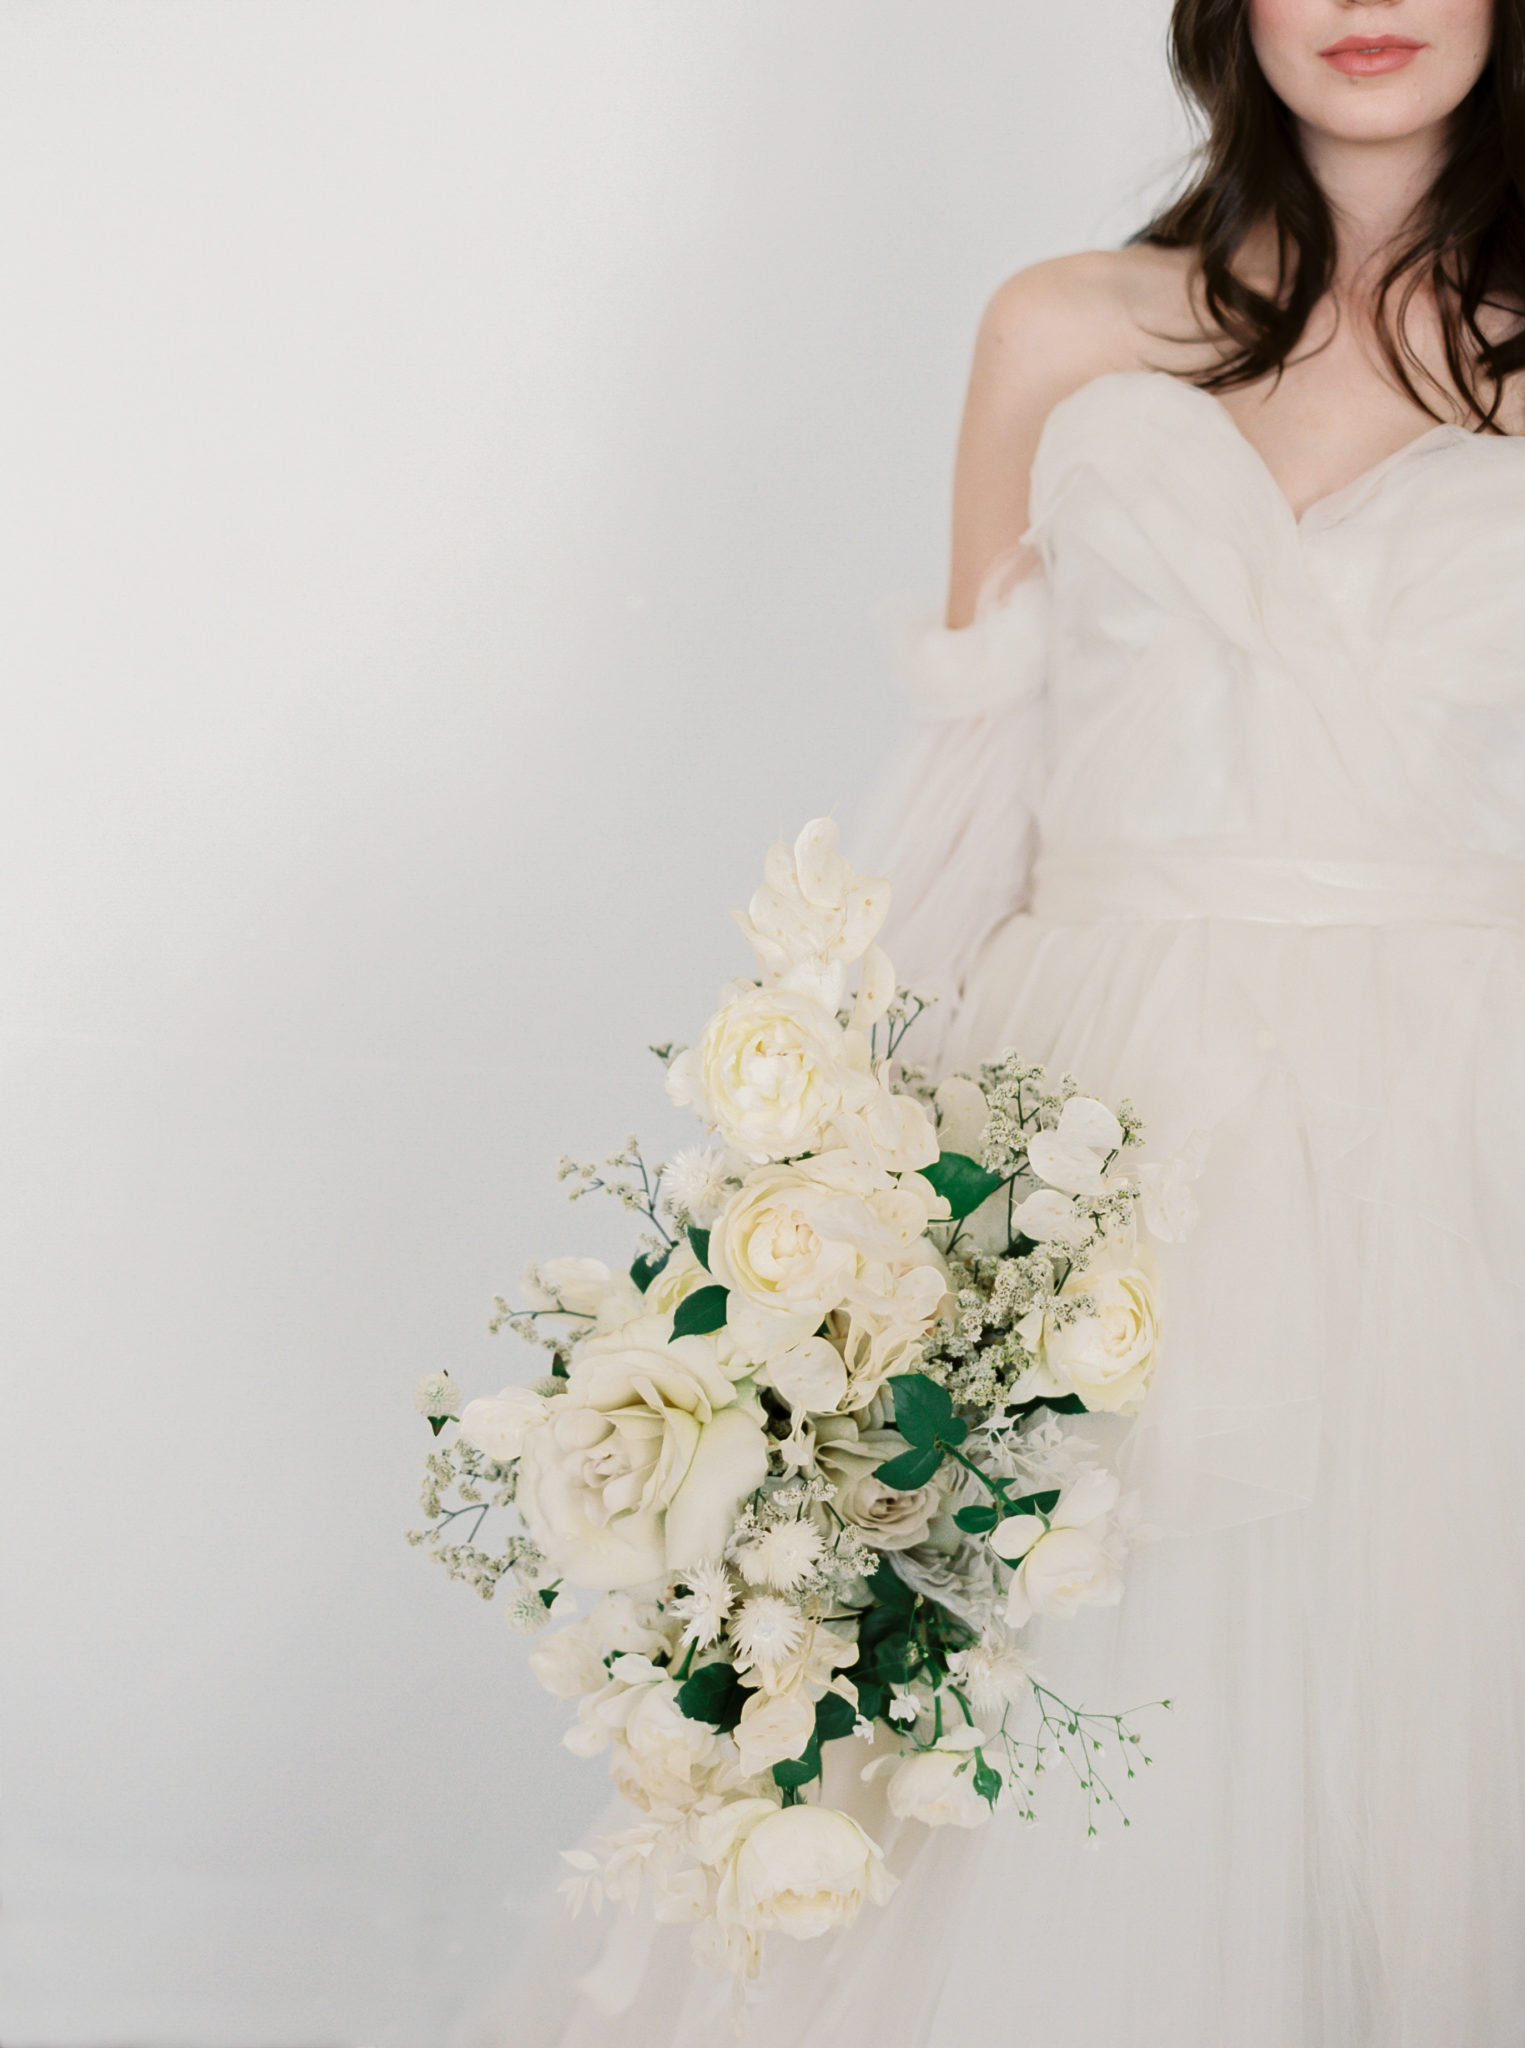 Bride and Groom | Bridal Editorial - Donny Zavala Photography